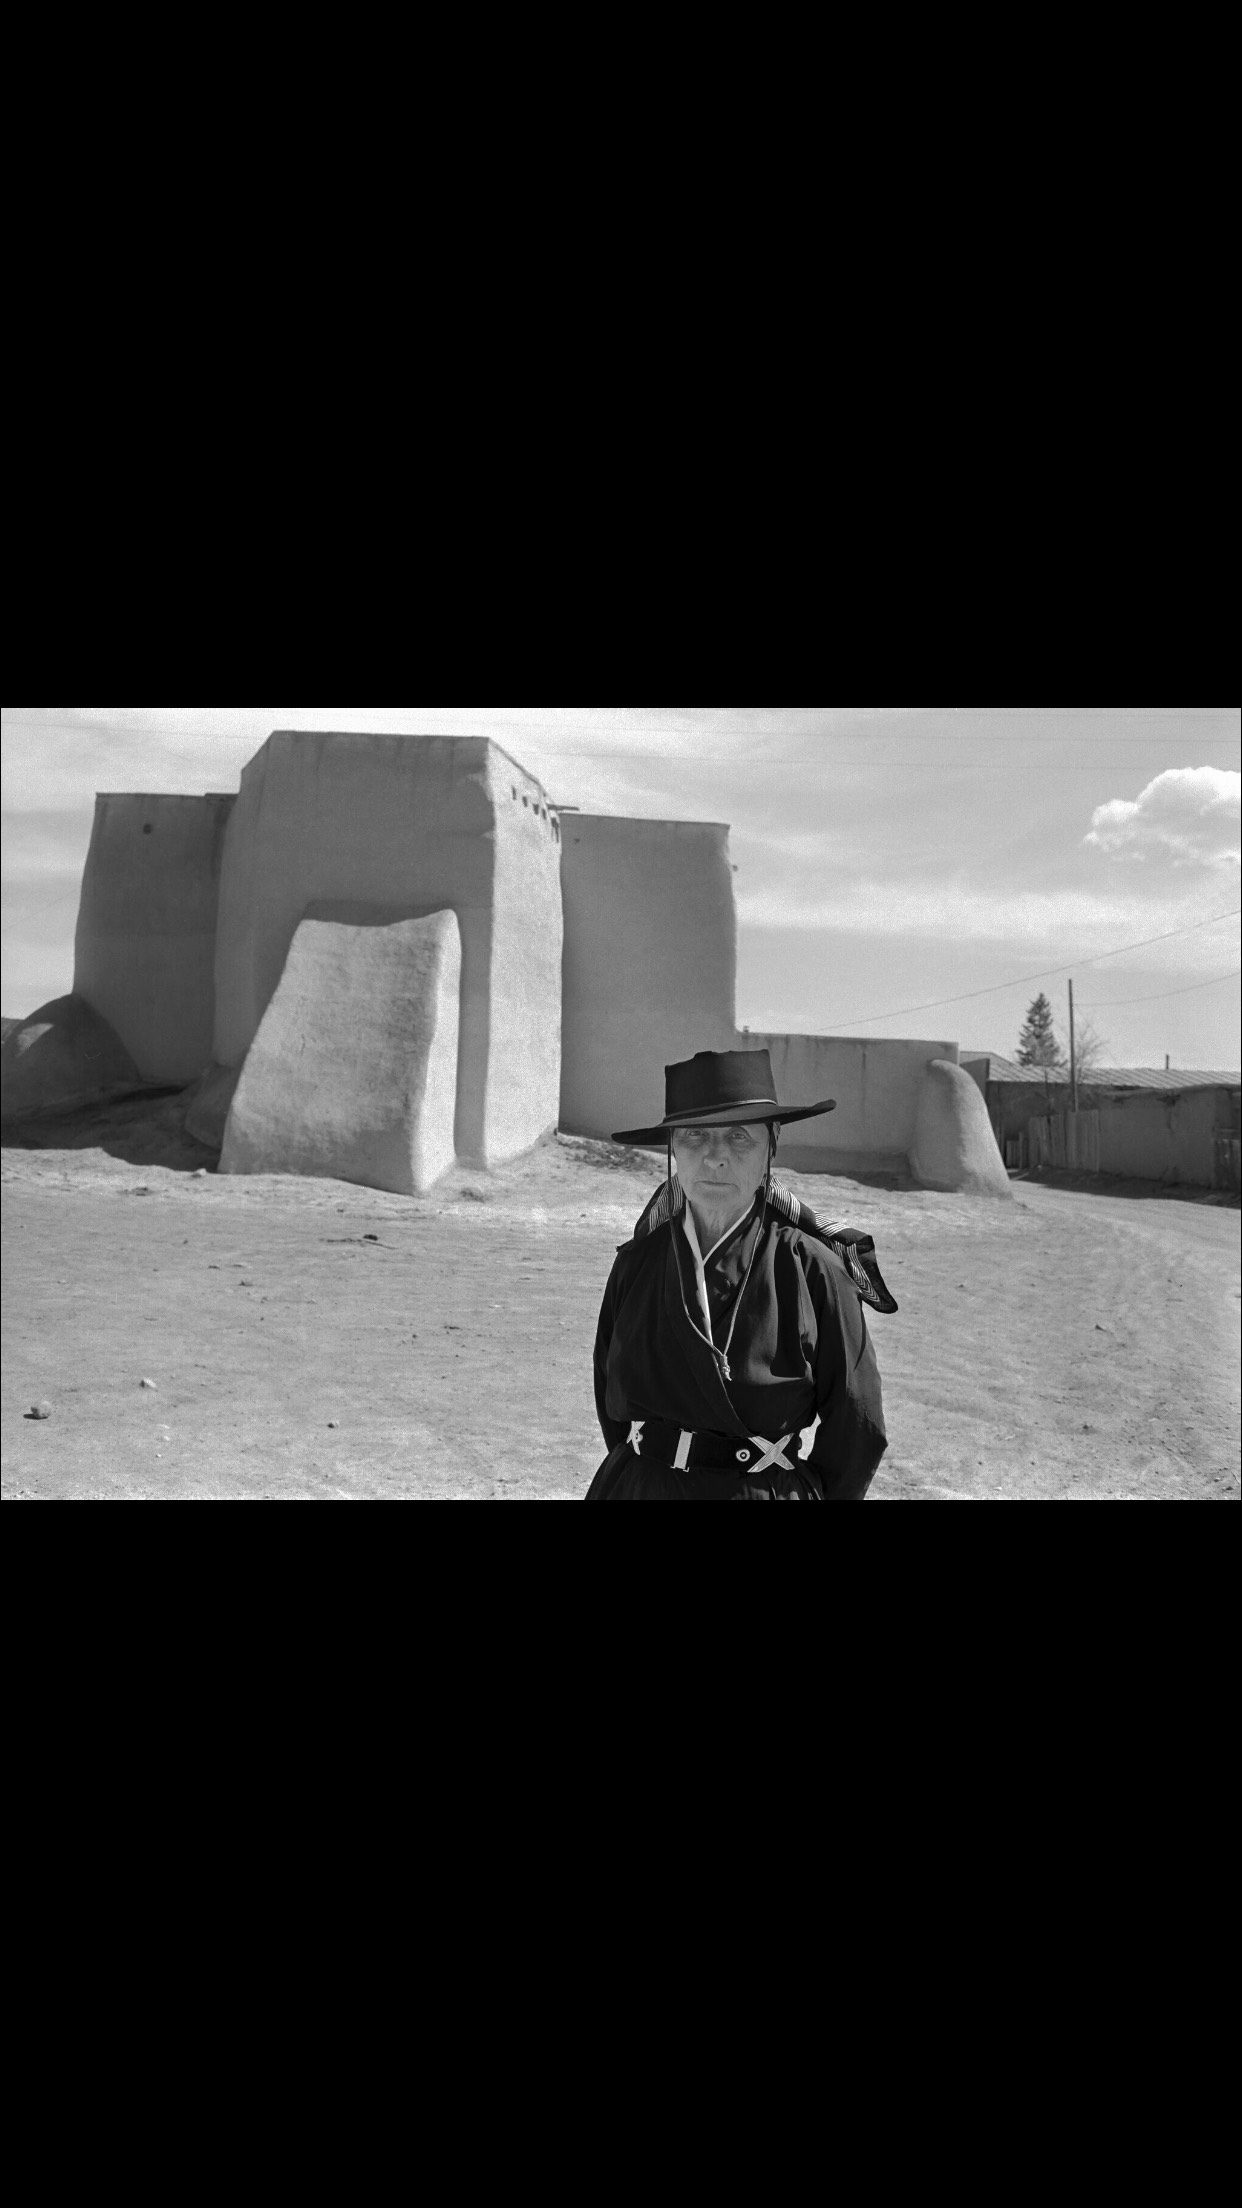 Georgia O'Keeffe, New Mexico, 1960